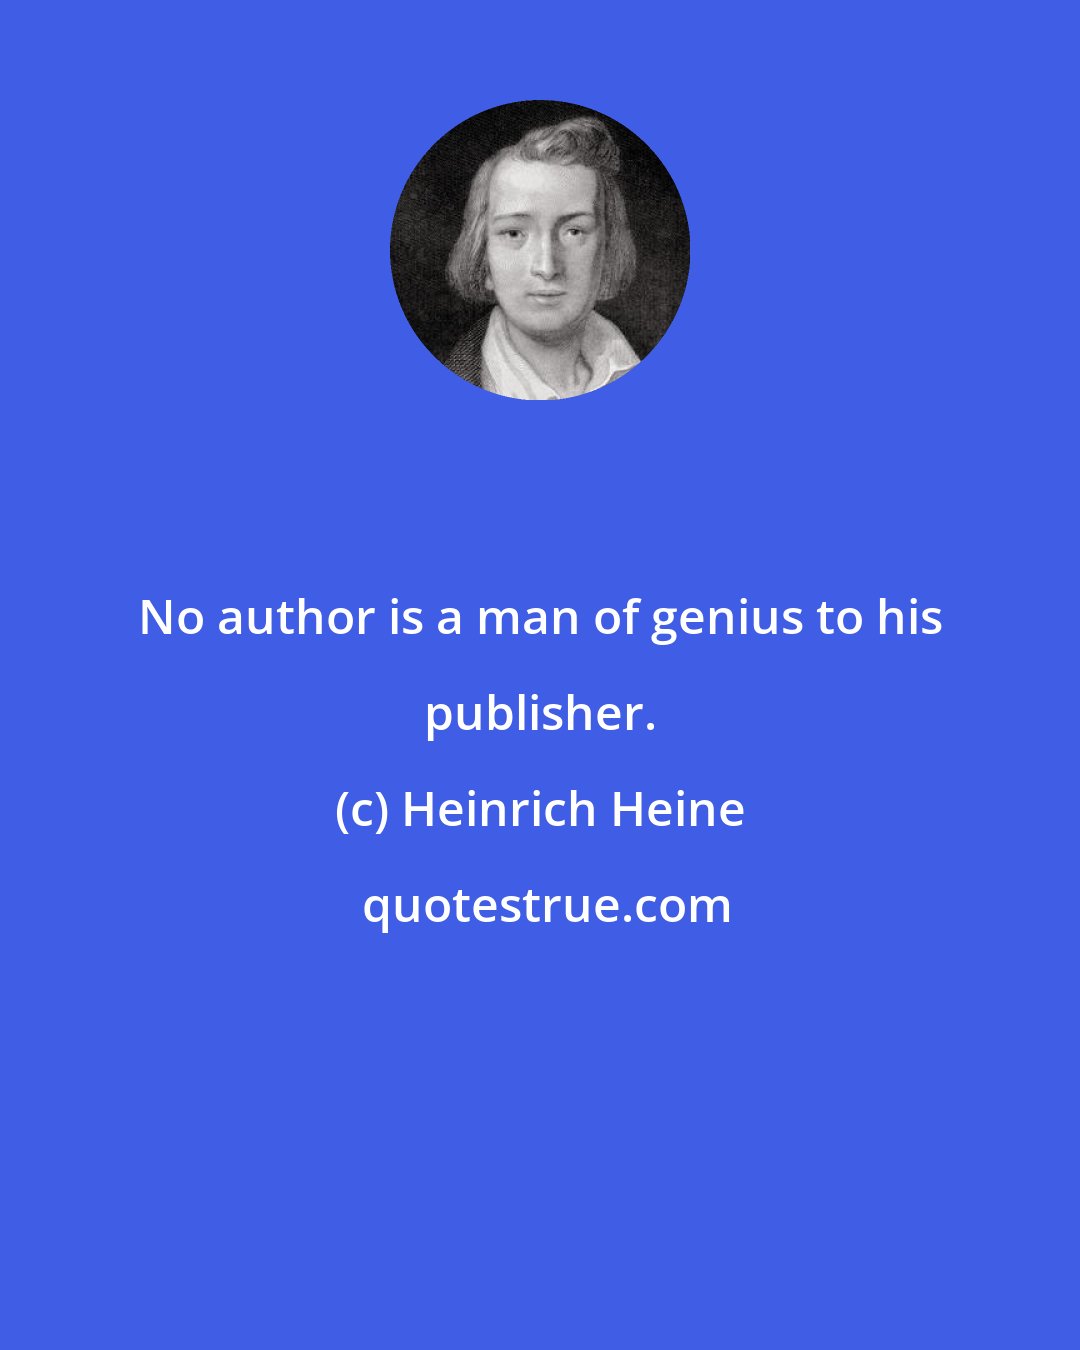 Heinrich Heine: No author is a man of genius to his publisher.